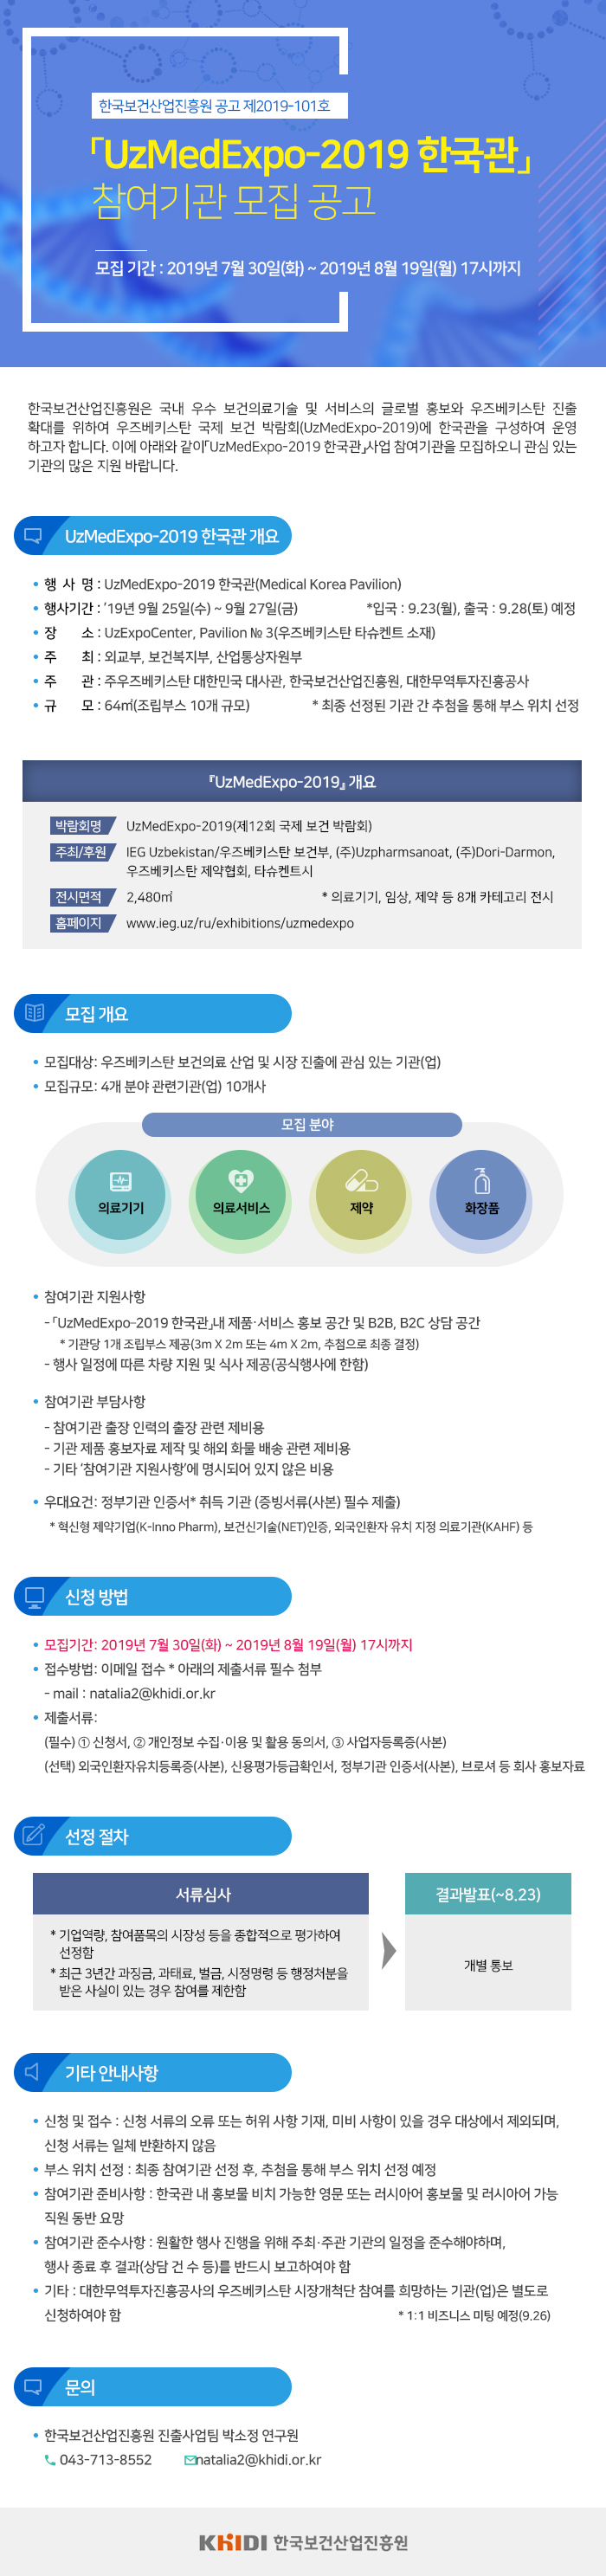 UzMedExpo-2019 한국관 참여기관 모집 공고 모집기간 : 2019년 7월 30일(화) ~2019년 8월 19일(월) 17시까지로 자세한 내용은 첨부된 파일([공고문] 참여기관 모집 공고.pdf)을 다운받아 확인해 주세요.